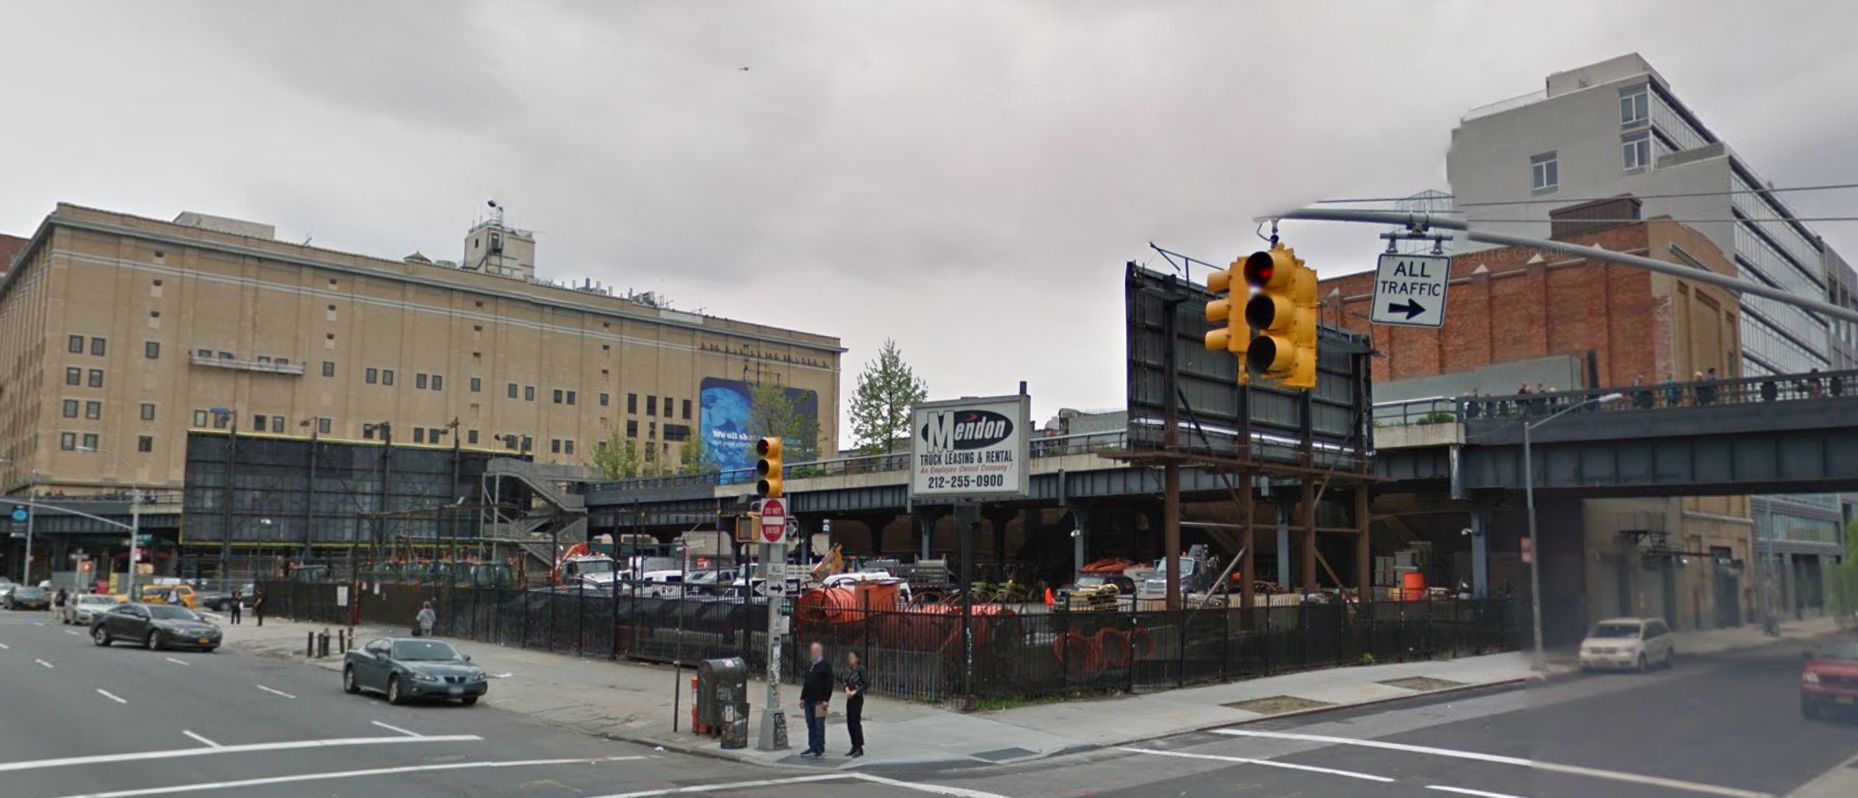 501 West 18th Street, image via Google Maps